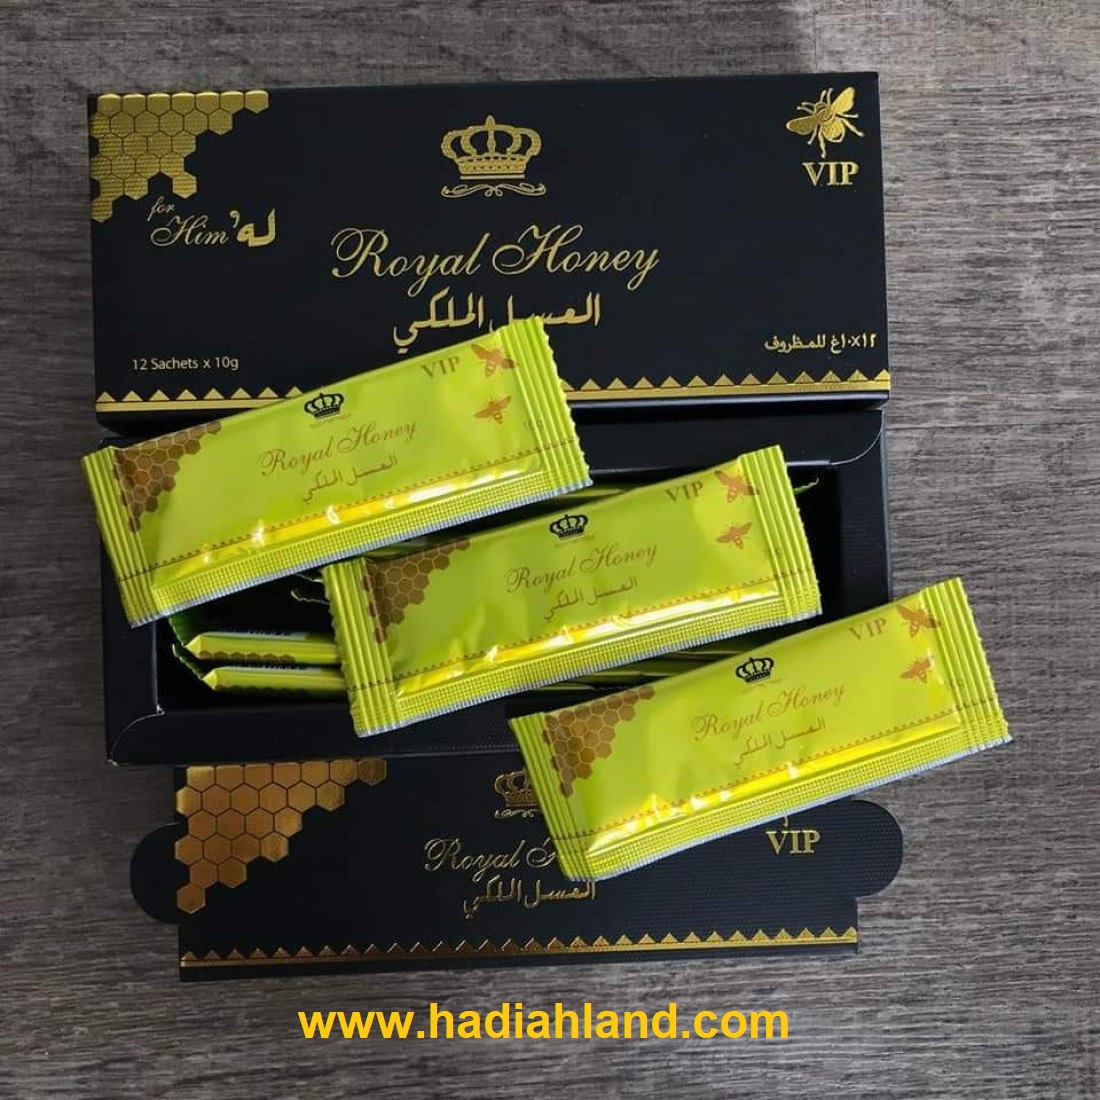 Crown Royal Honey Vip 10g | royal honey vip price wholesale | royal